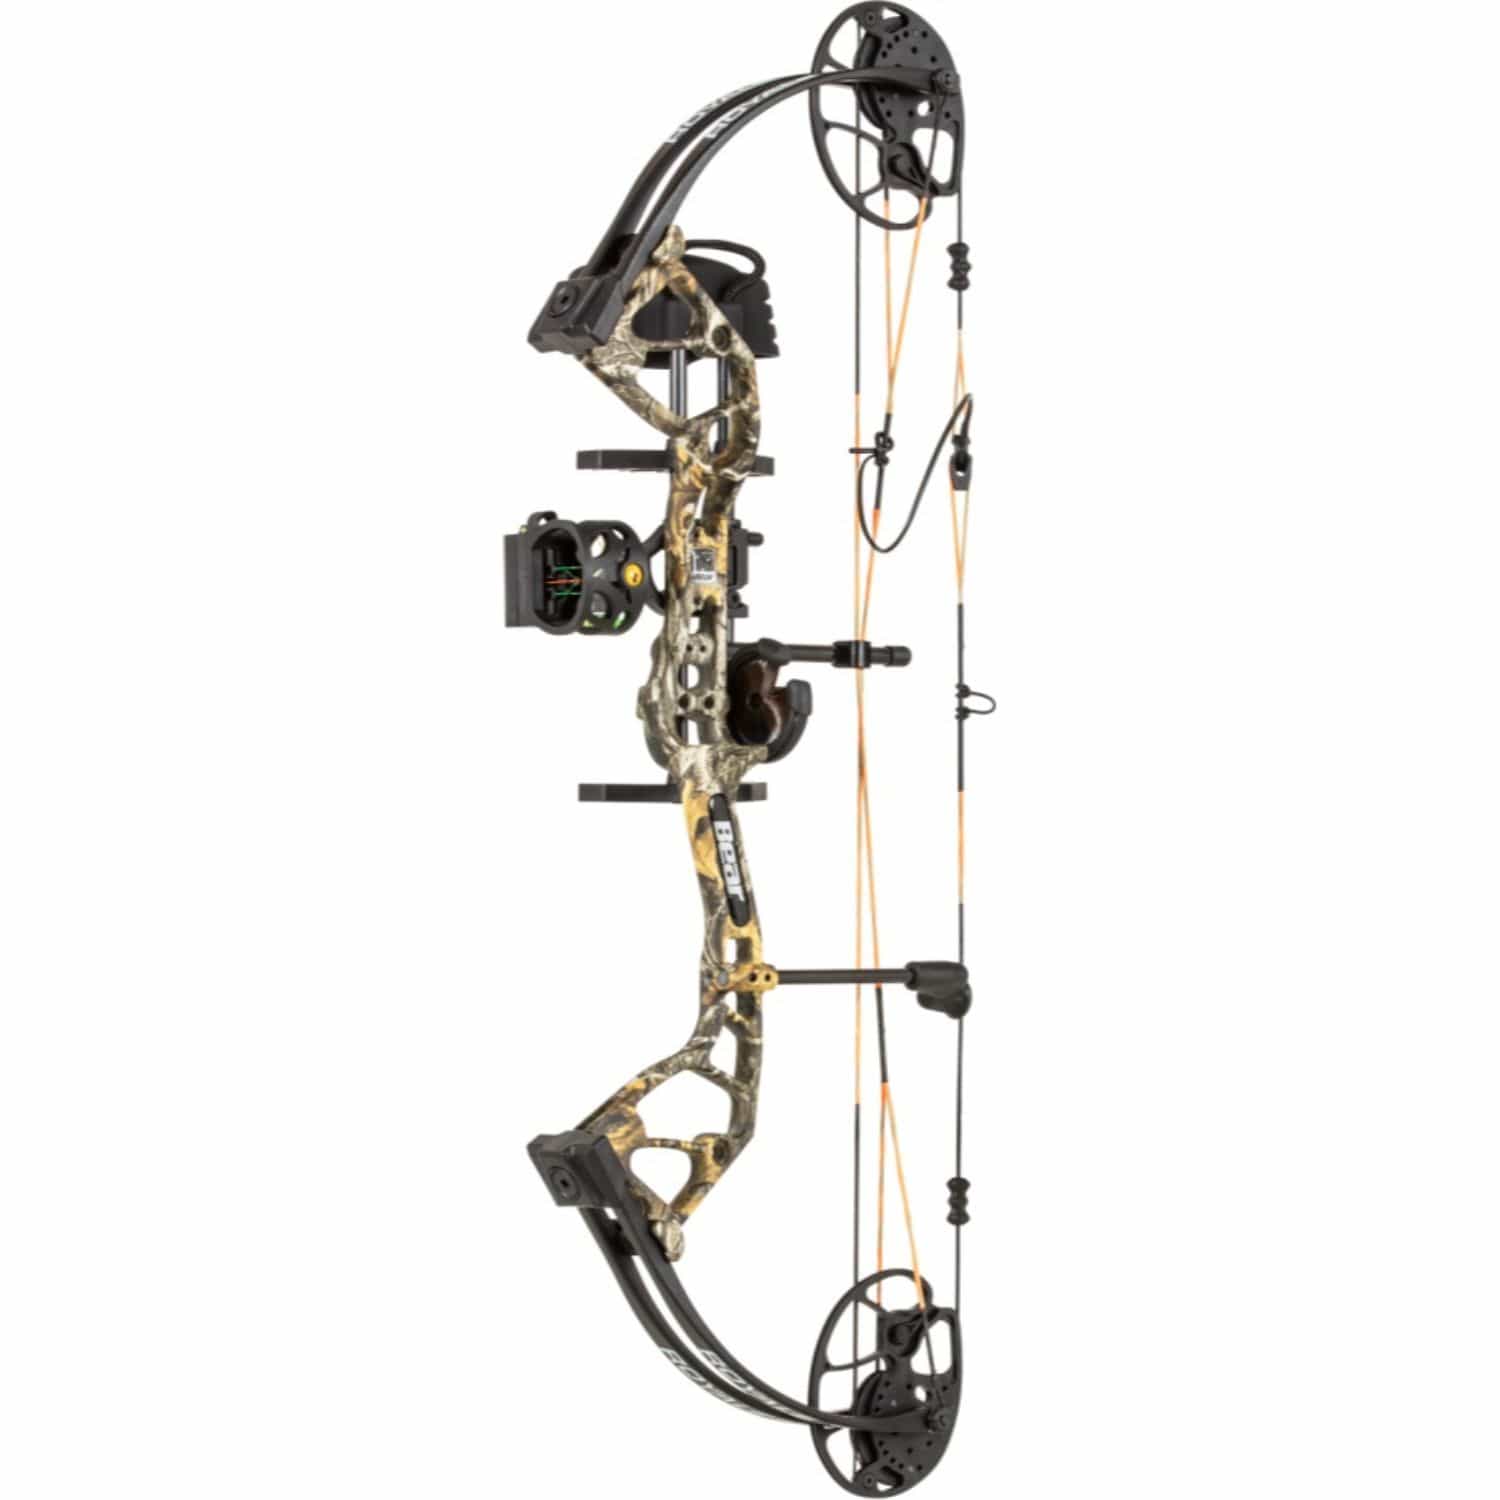 Bear Archery Archery : Compound Bow Bear Archery Royale Compound Bow with 5-50 lbs-Realtree Edge